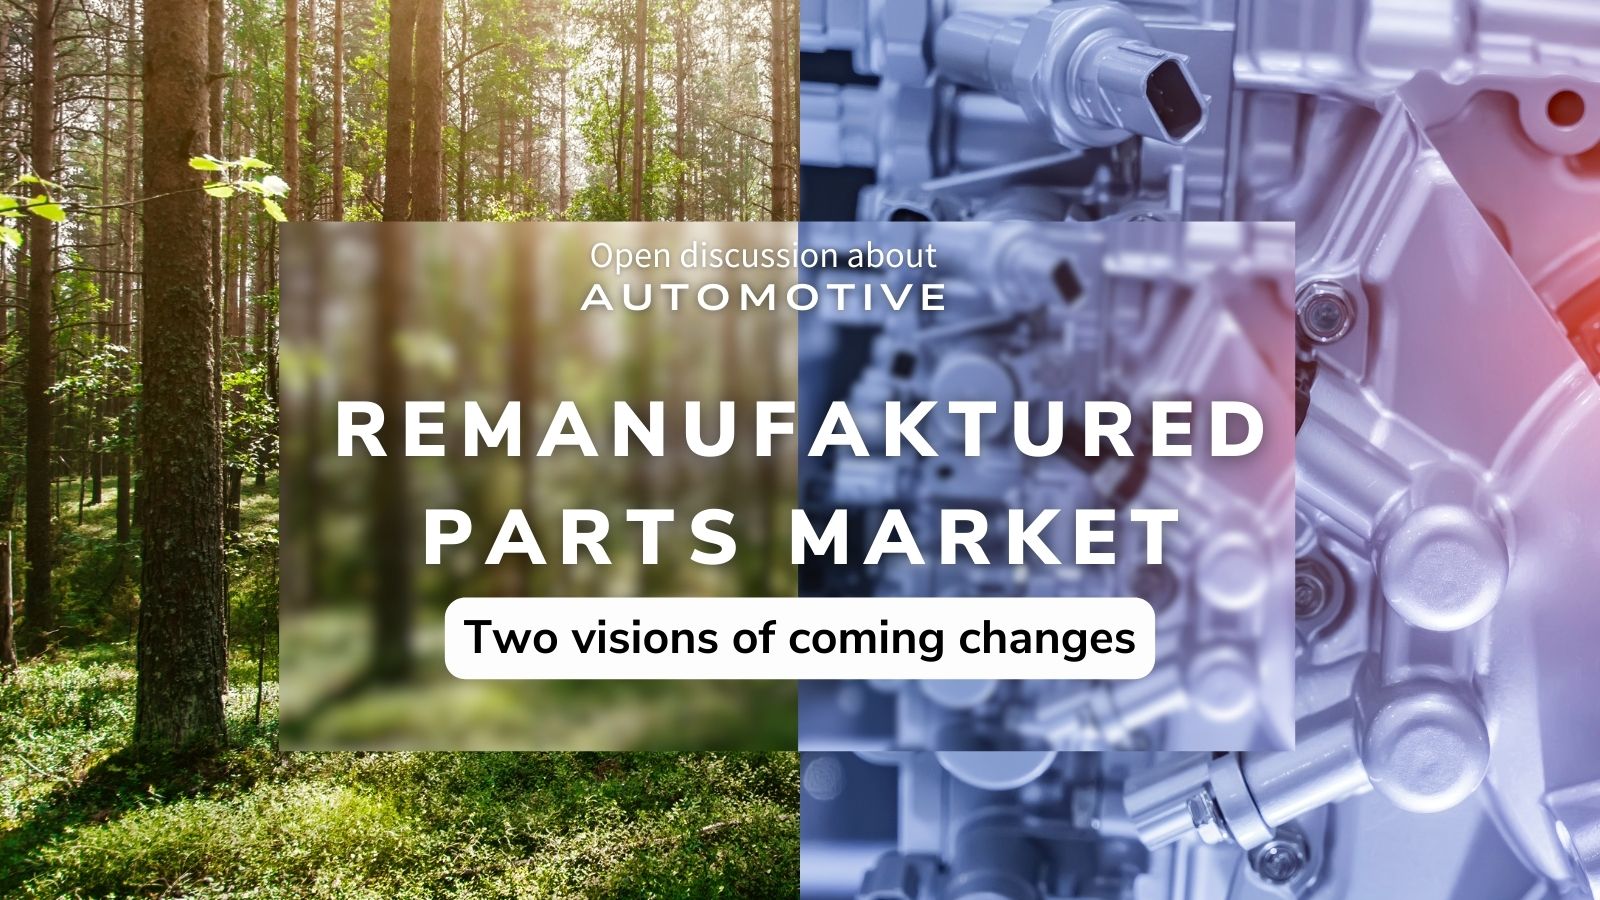 Remanufactured parts market